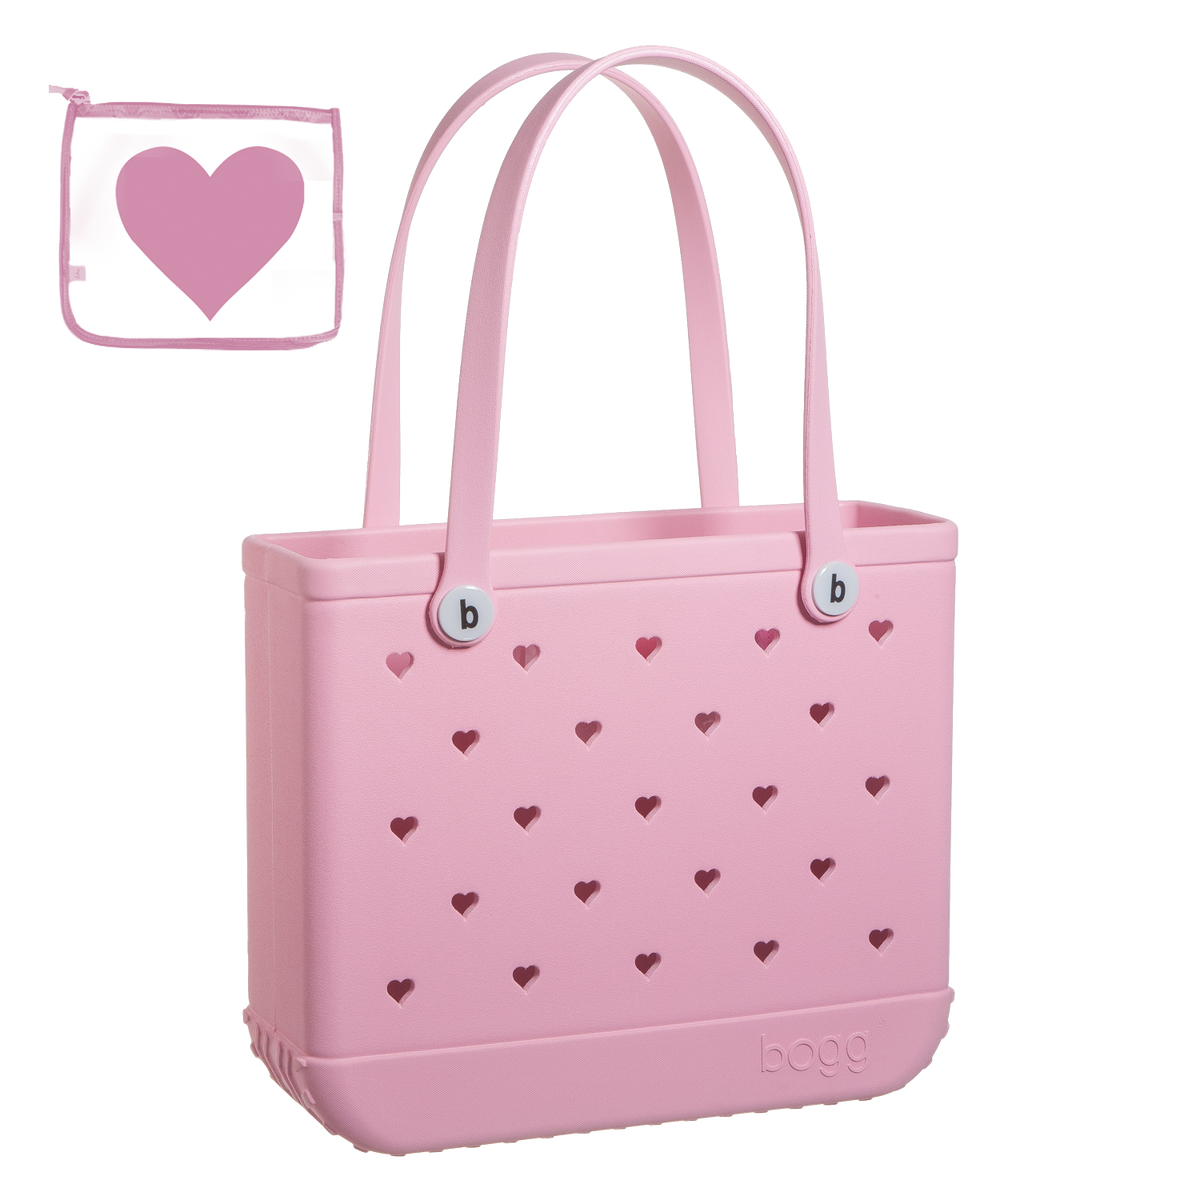 ☘☘☘ "The Original Baby Bogg Bag" Palm Pink Tote